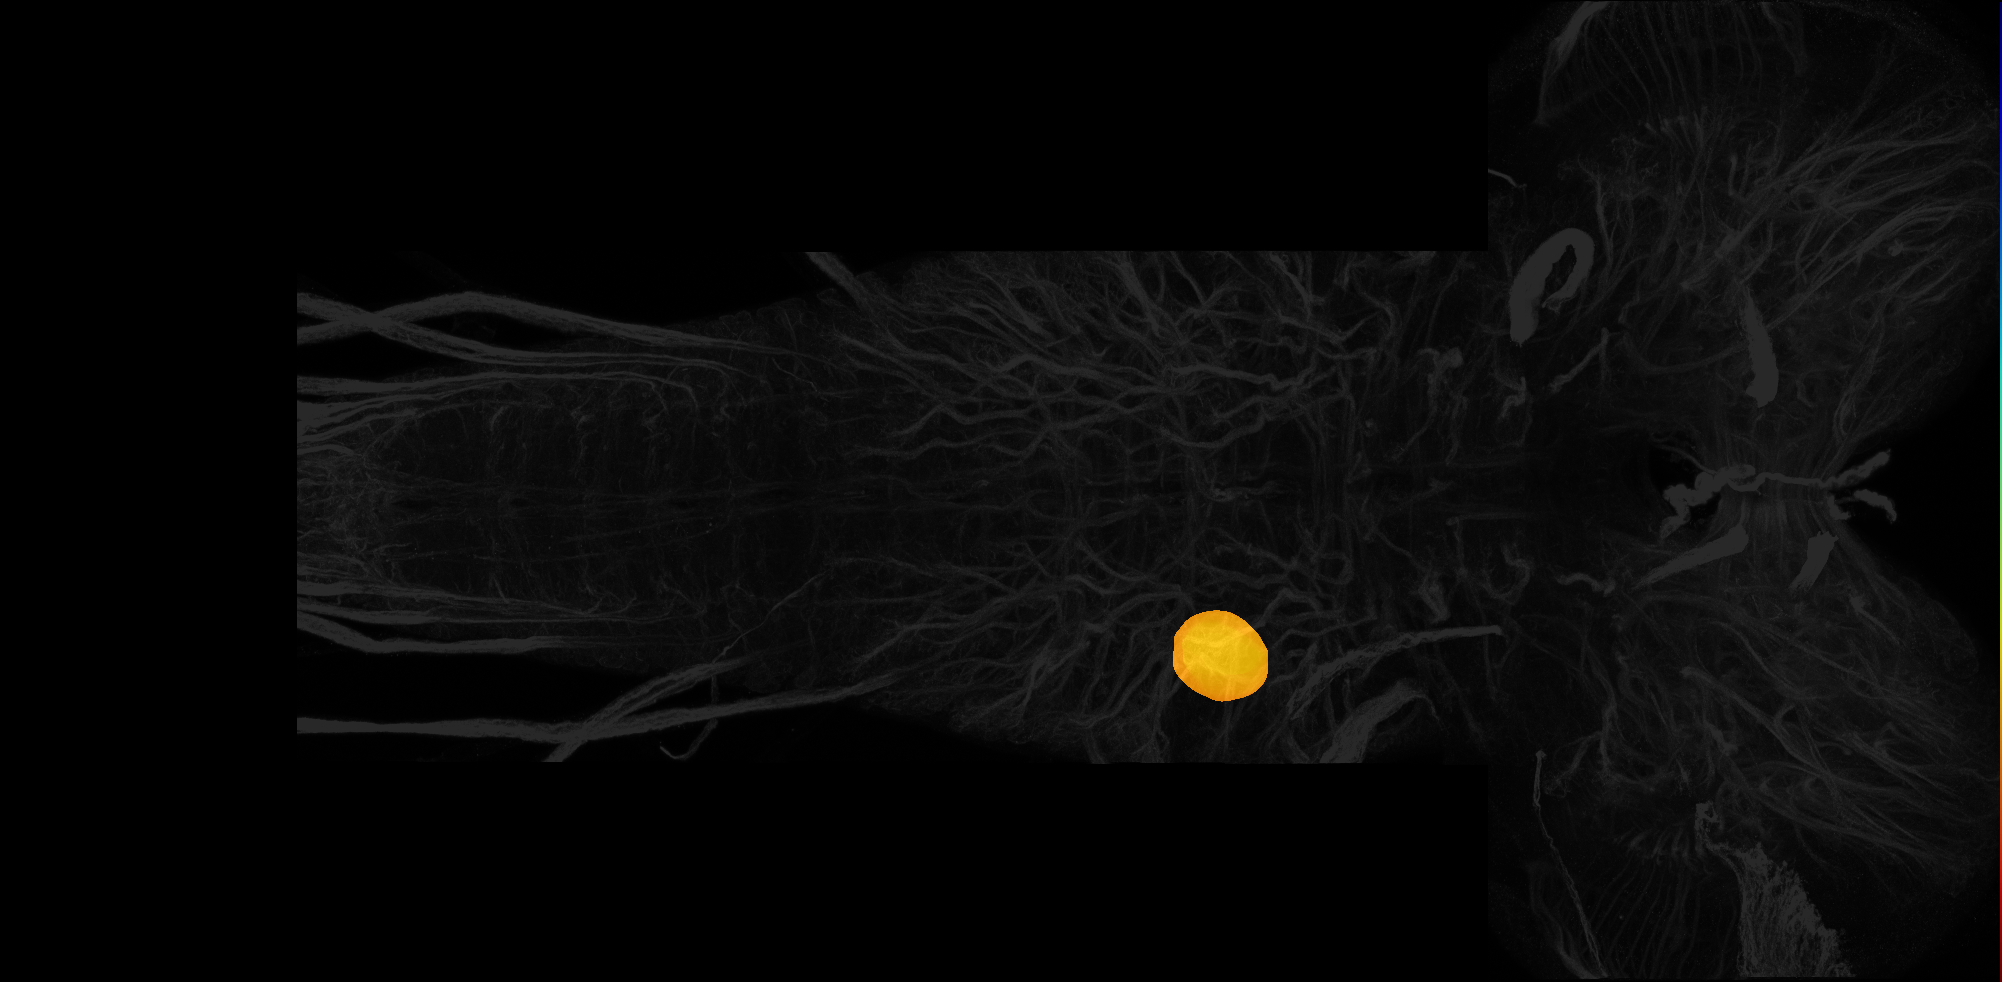 ventral nerve cord synaptic neuropil subdomain